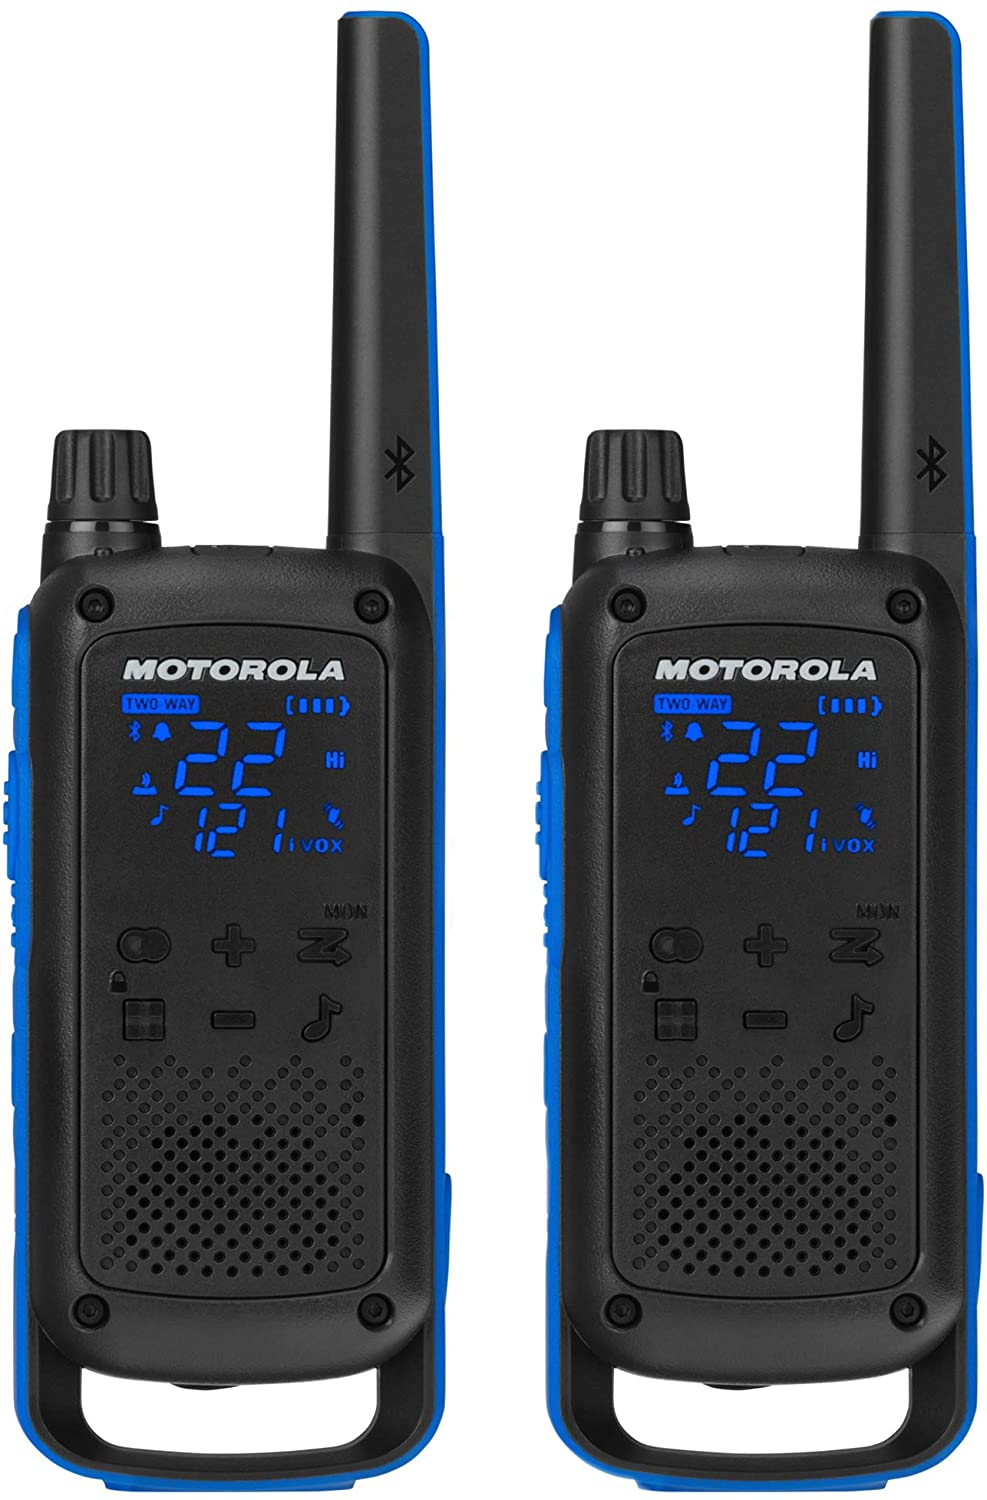 Motorola Talkabout T800 56 km Bluetooth Two-Way Radio - 2 Pack